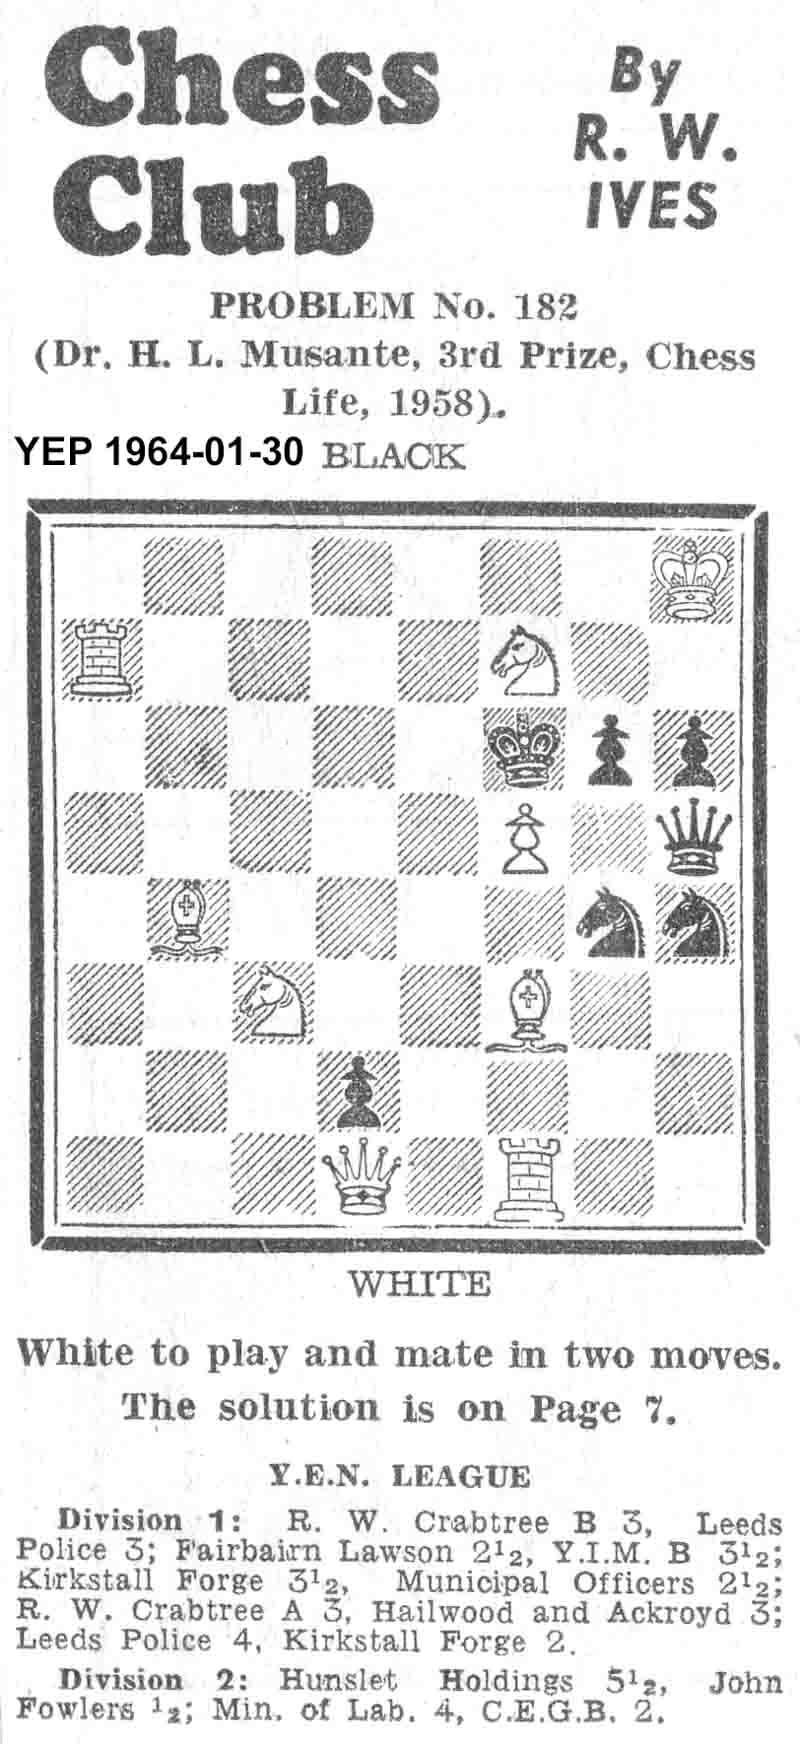 30 January 1964, Yorkshire Evening Post, chess column